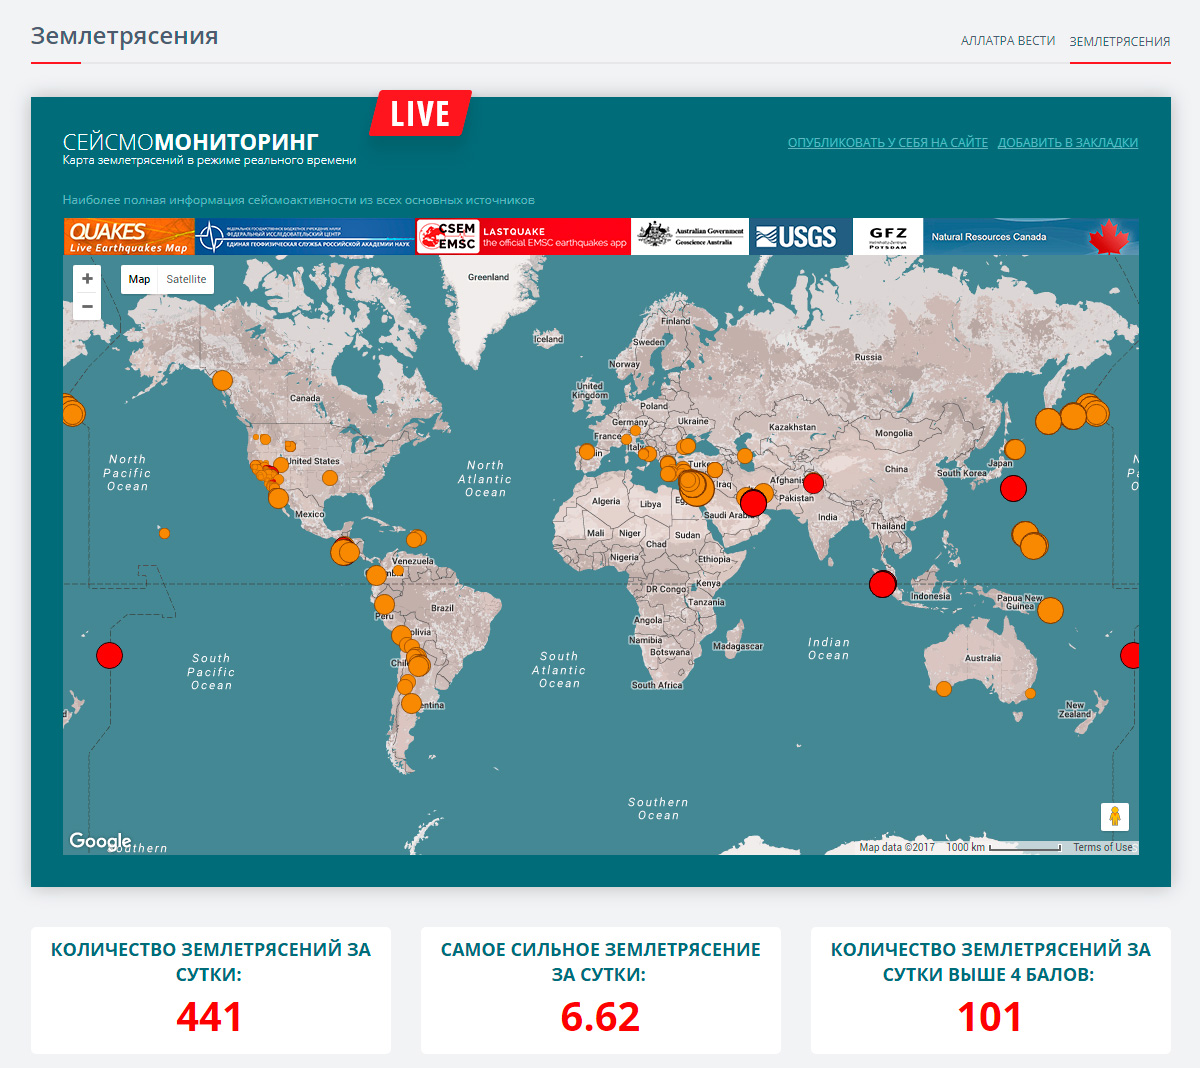 Что с картой мир сегодня. Землетрясения за последние годы на карте. Карта сильных землетрясений.